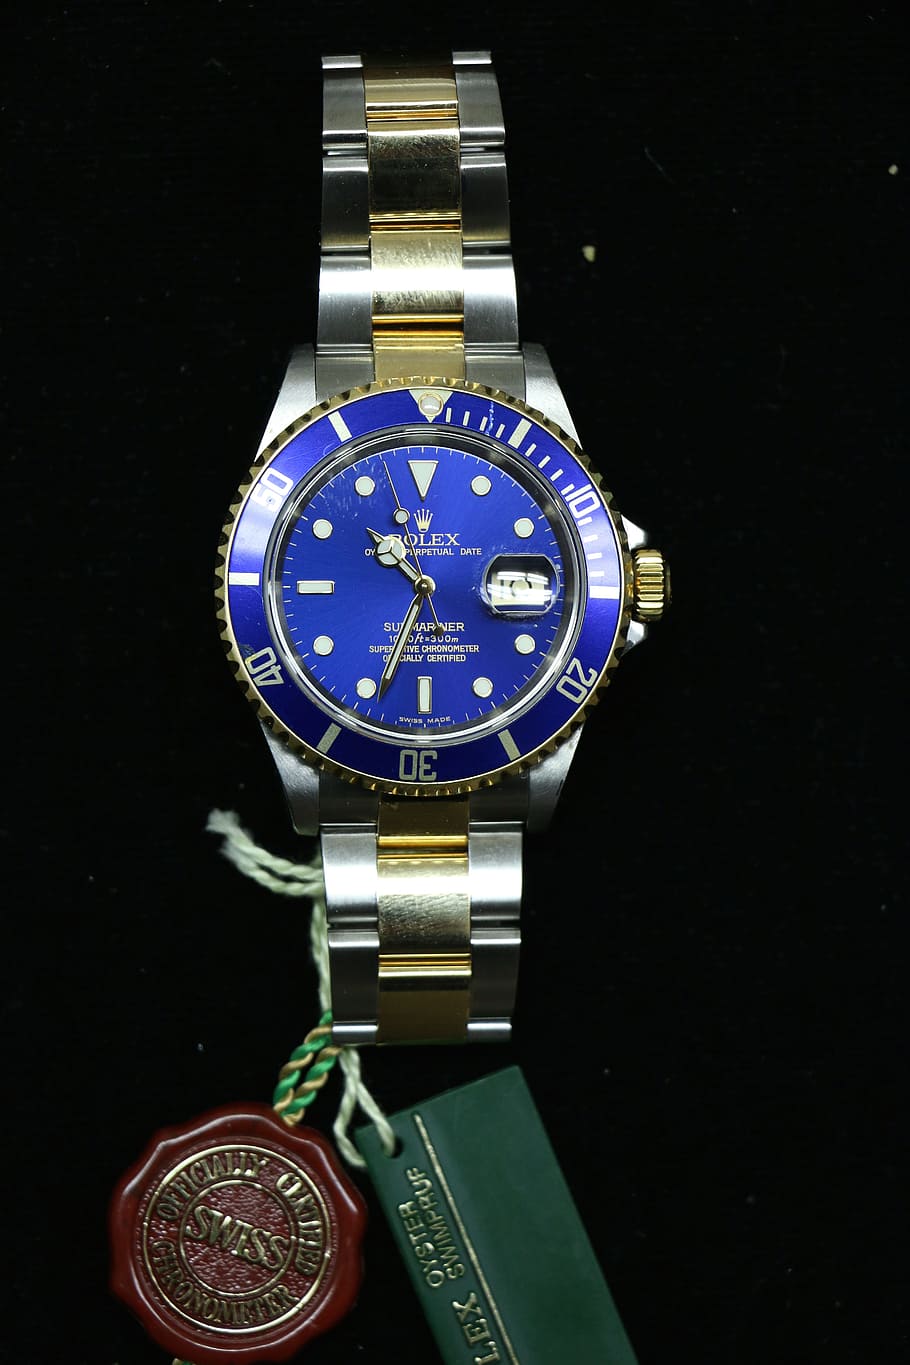 redondo análogo rolex de color plateado, reloj, banda de enlace, reloj de pulsera, Rolex, submarino, azul, hora, esfera del reloj, fondo negro